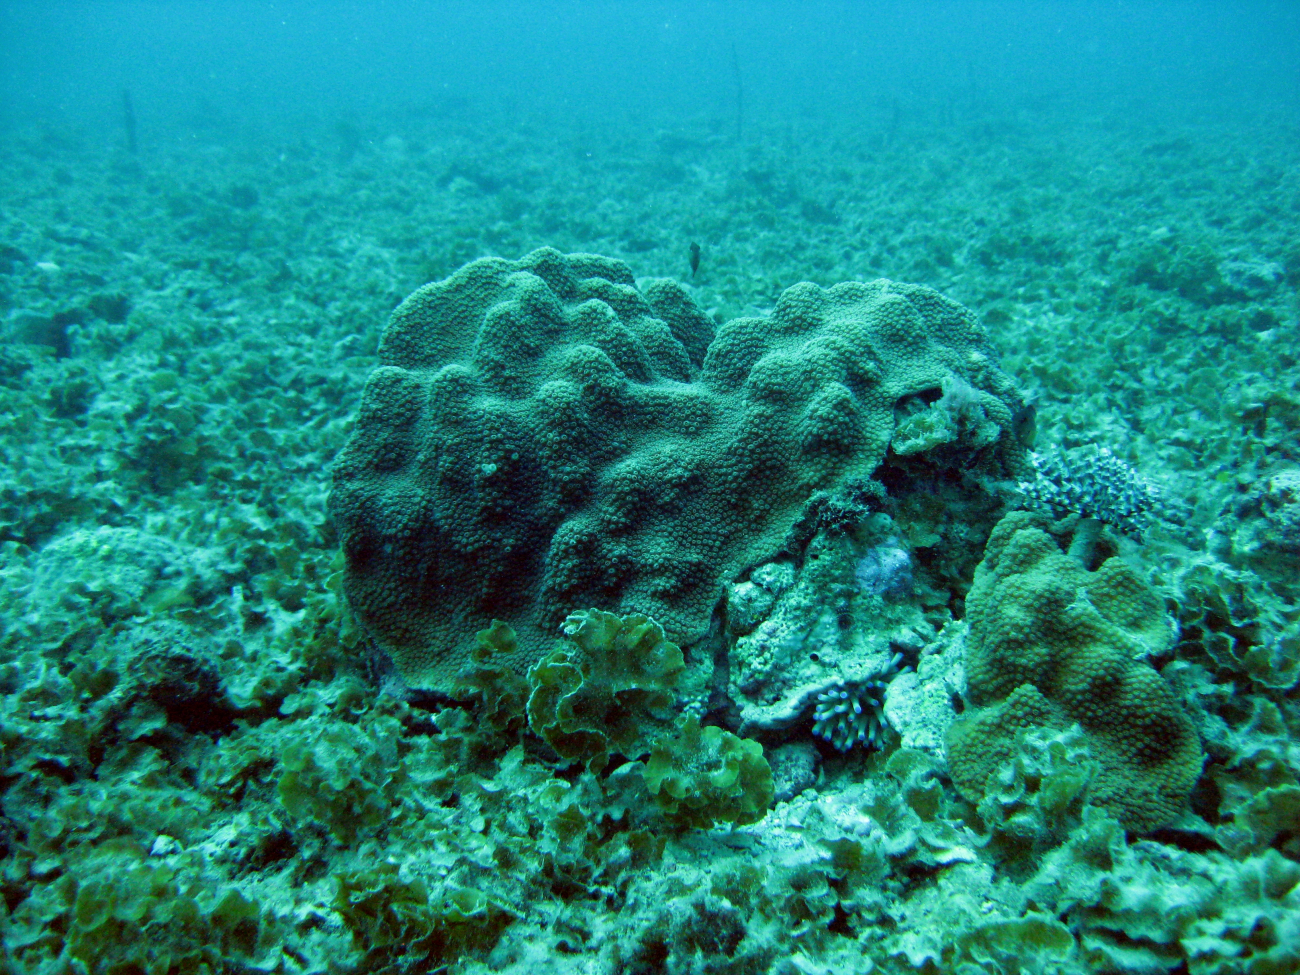 Boulder star coral complex (Montastraea annularis) surrounded by encrustingfan-leaf algae (Lobophora sp